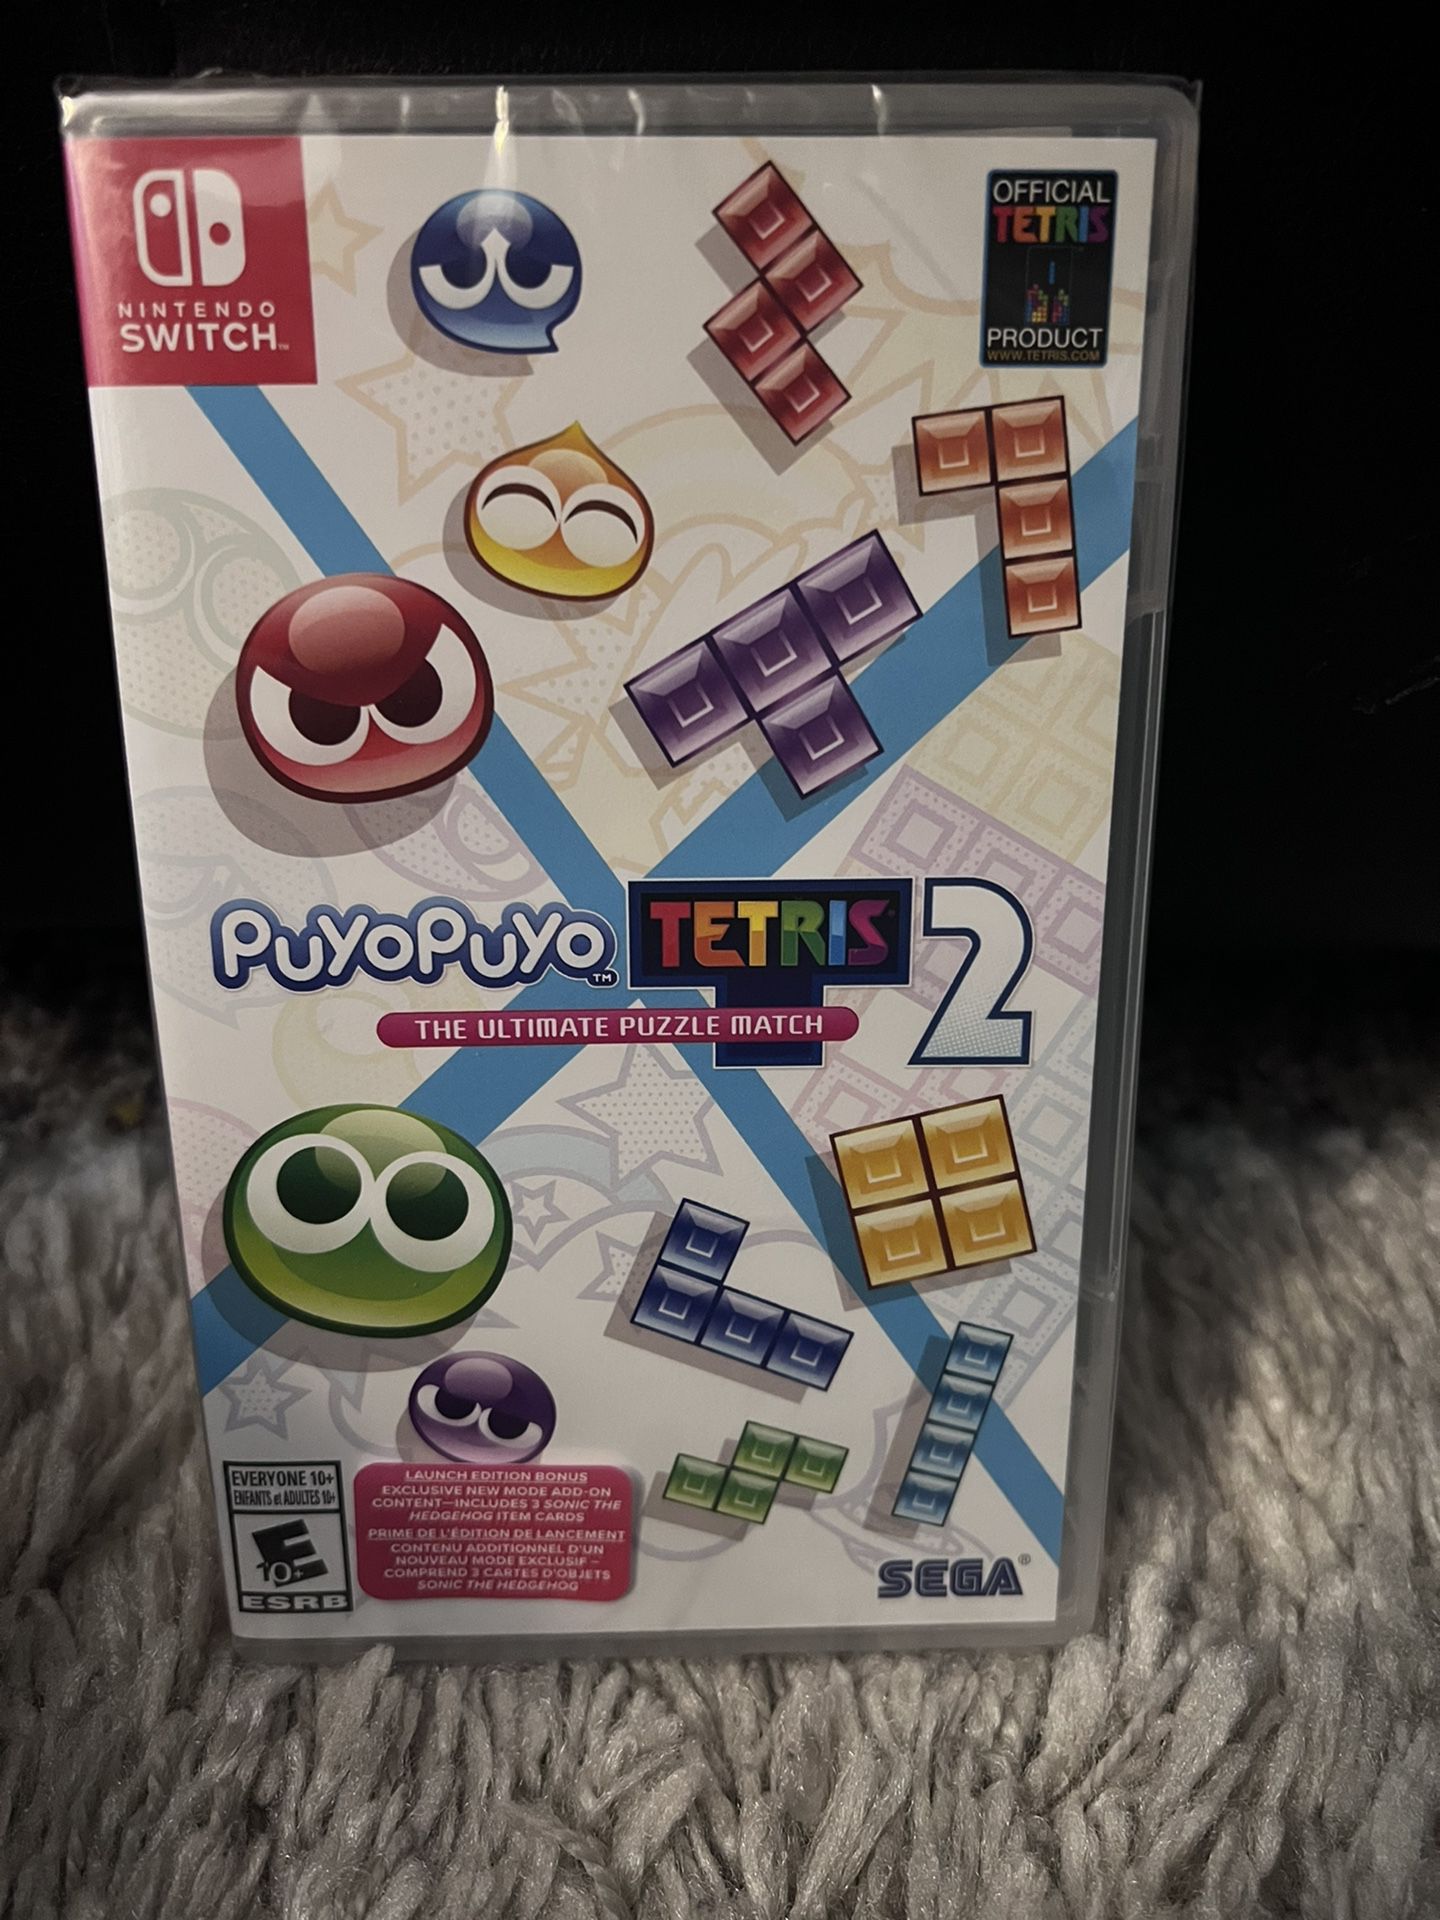 Nintendo switch Puyopuyo Tetris 2 